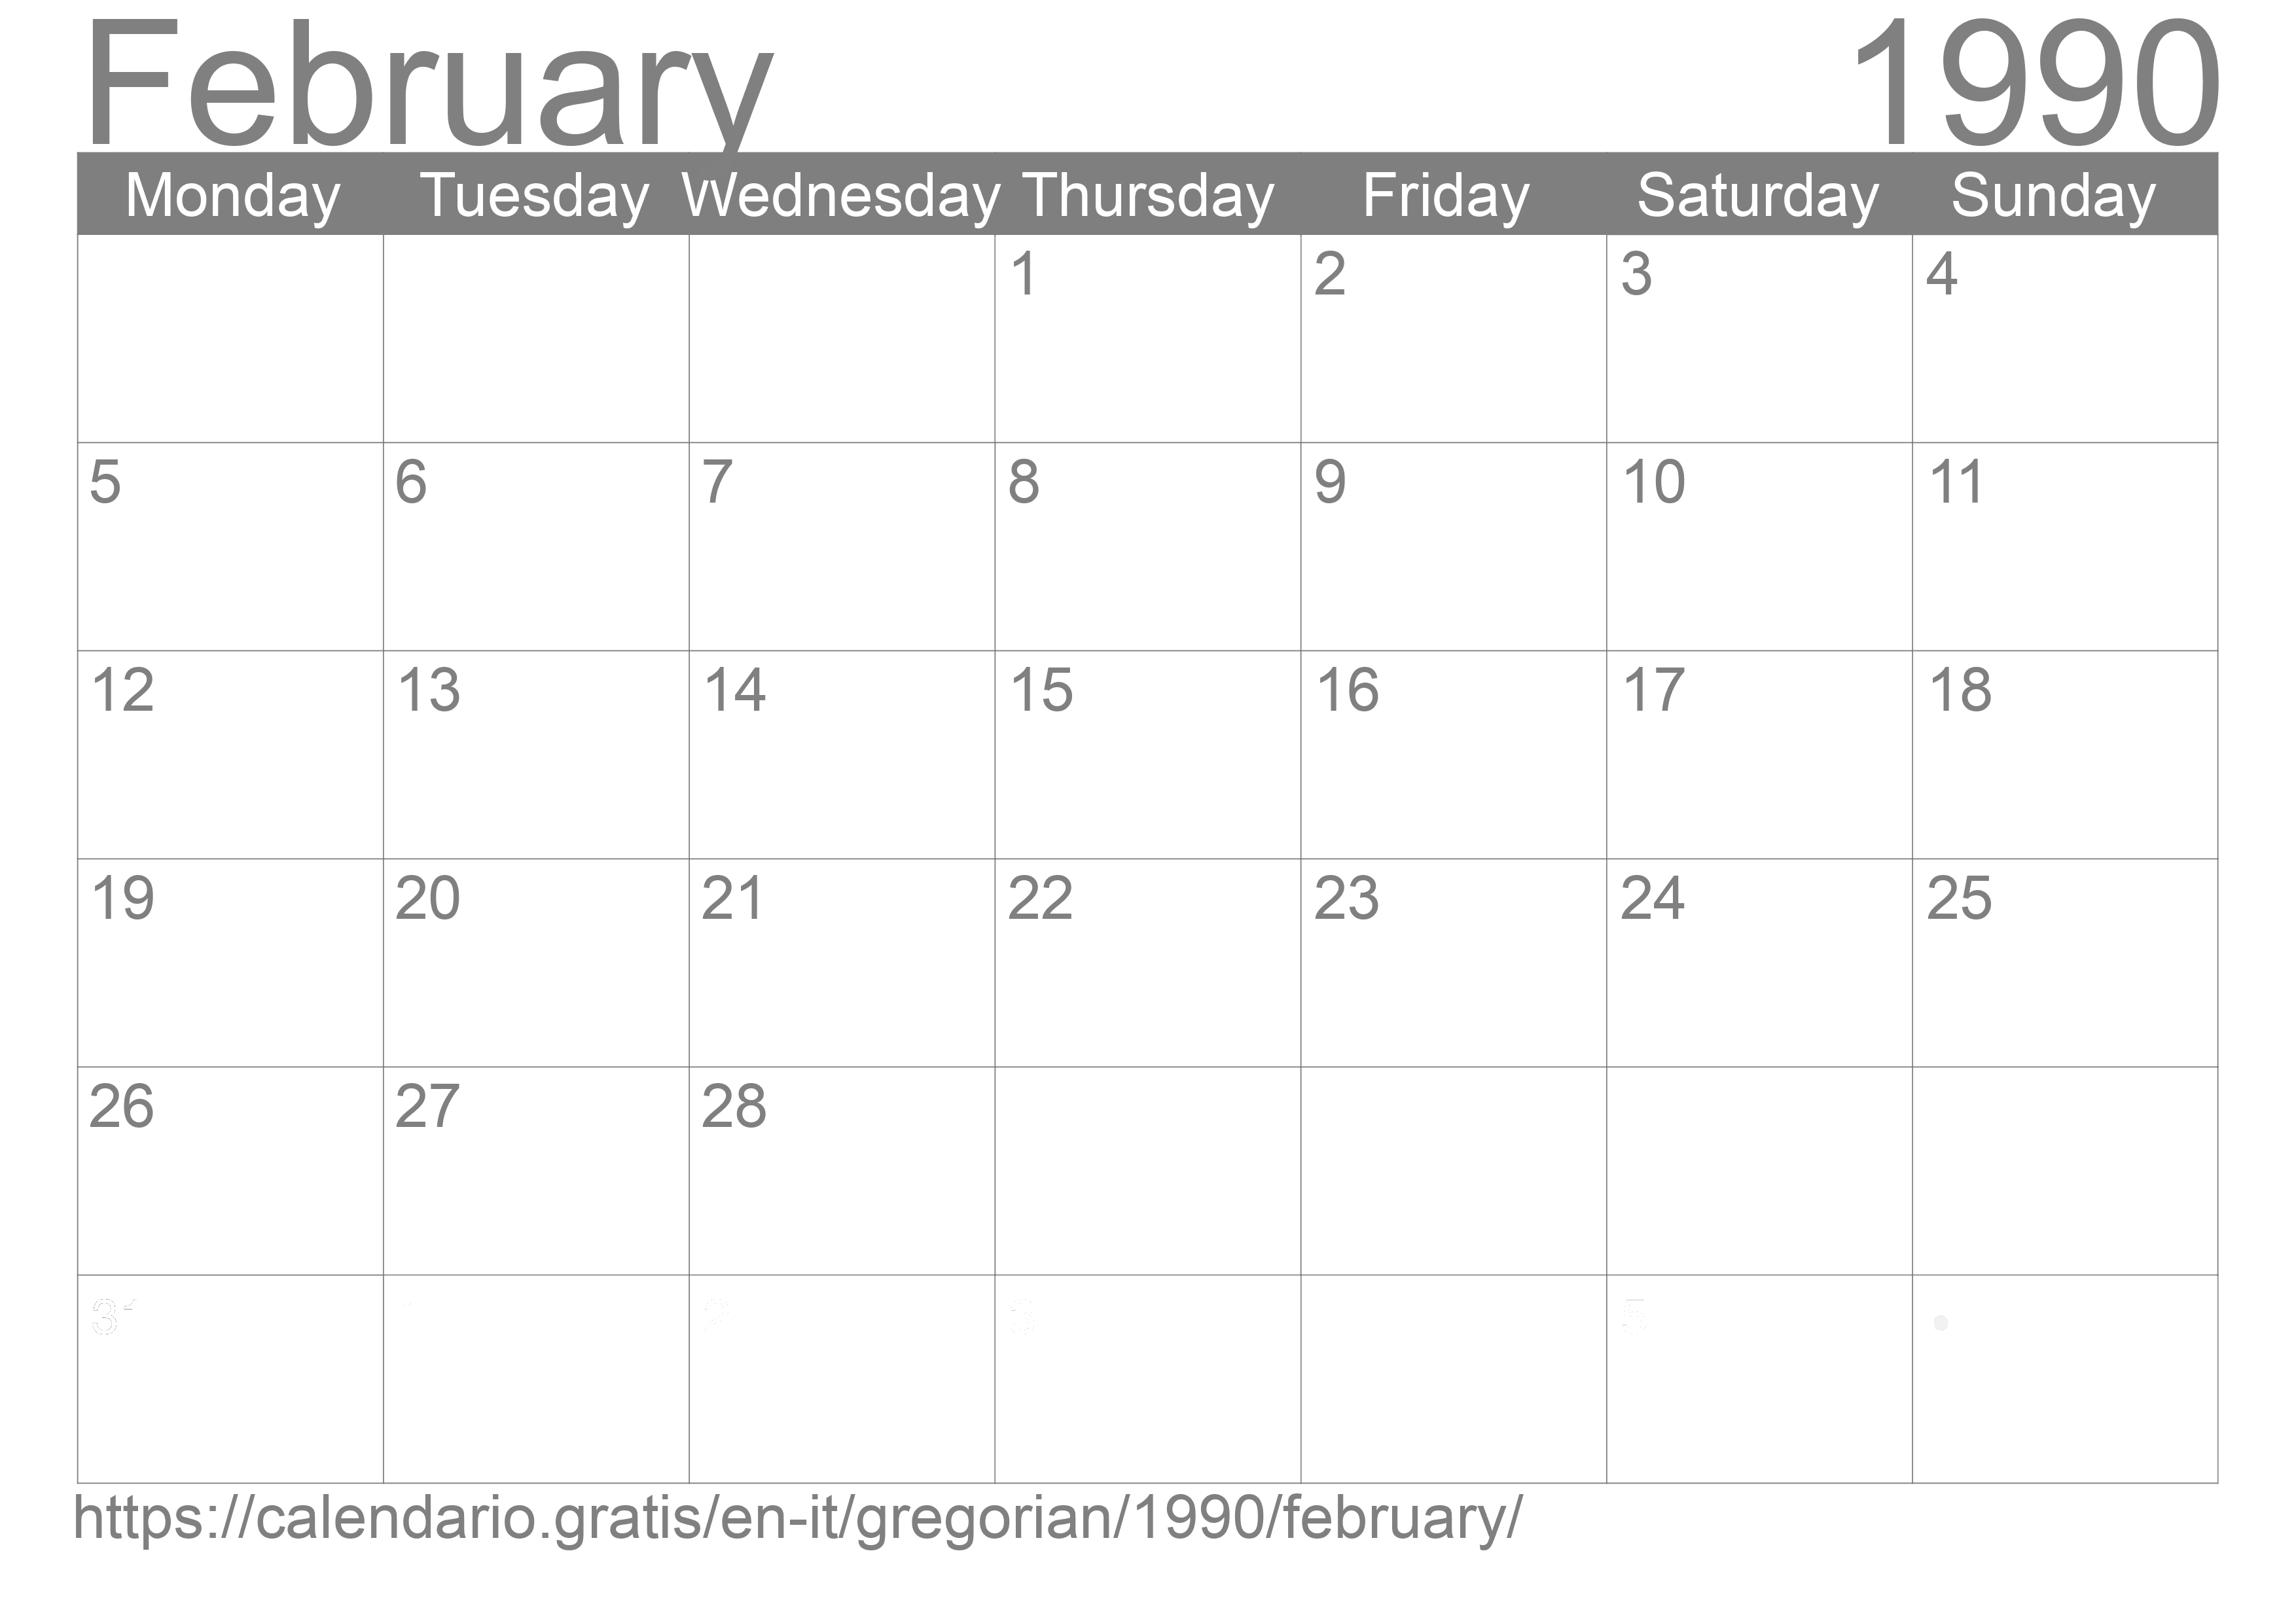 Calendar February 1990 to print